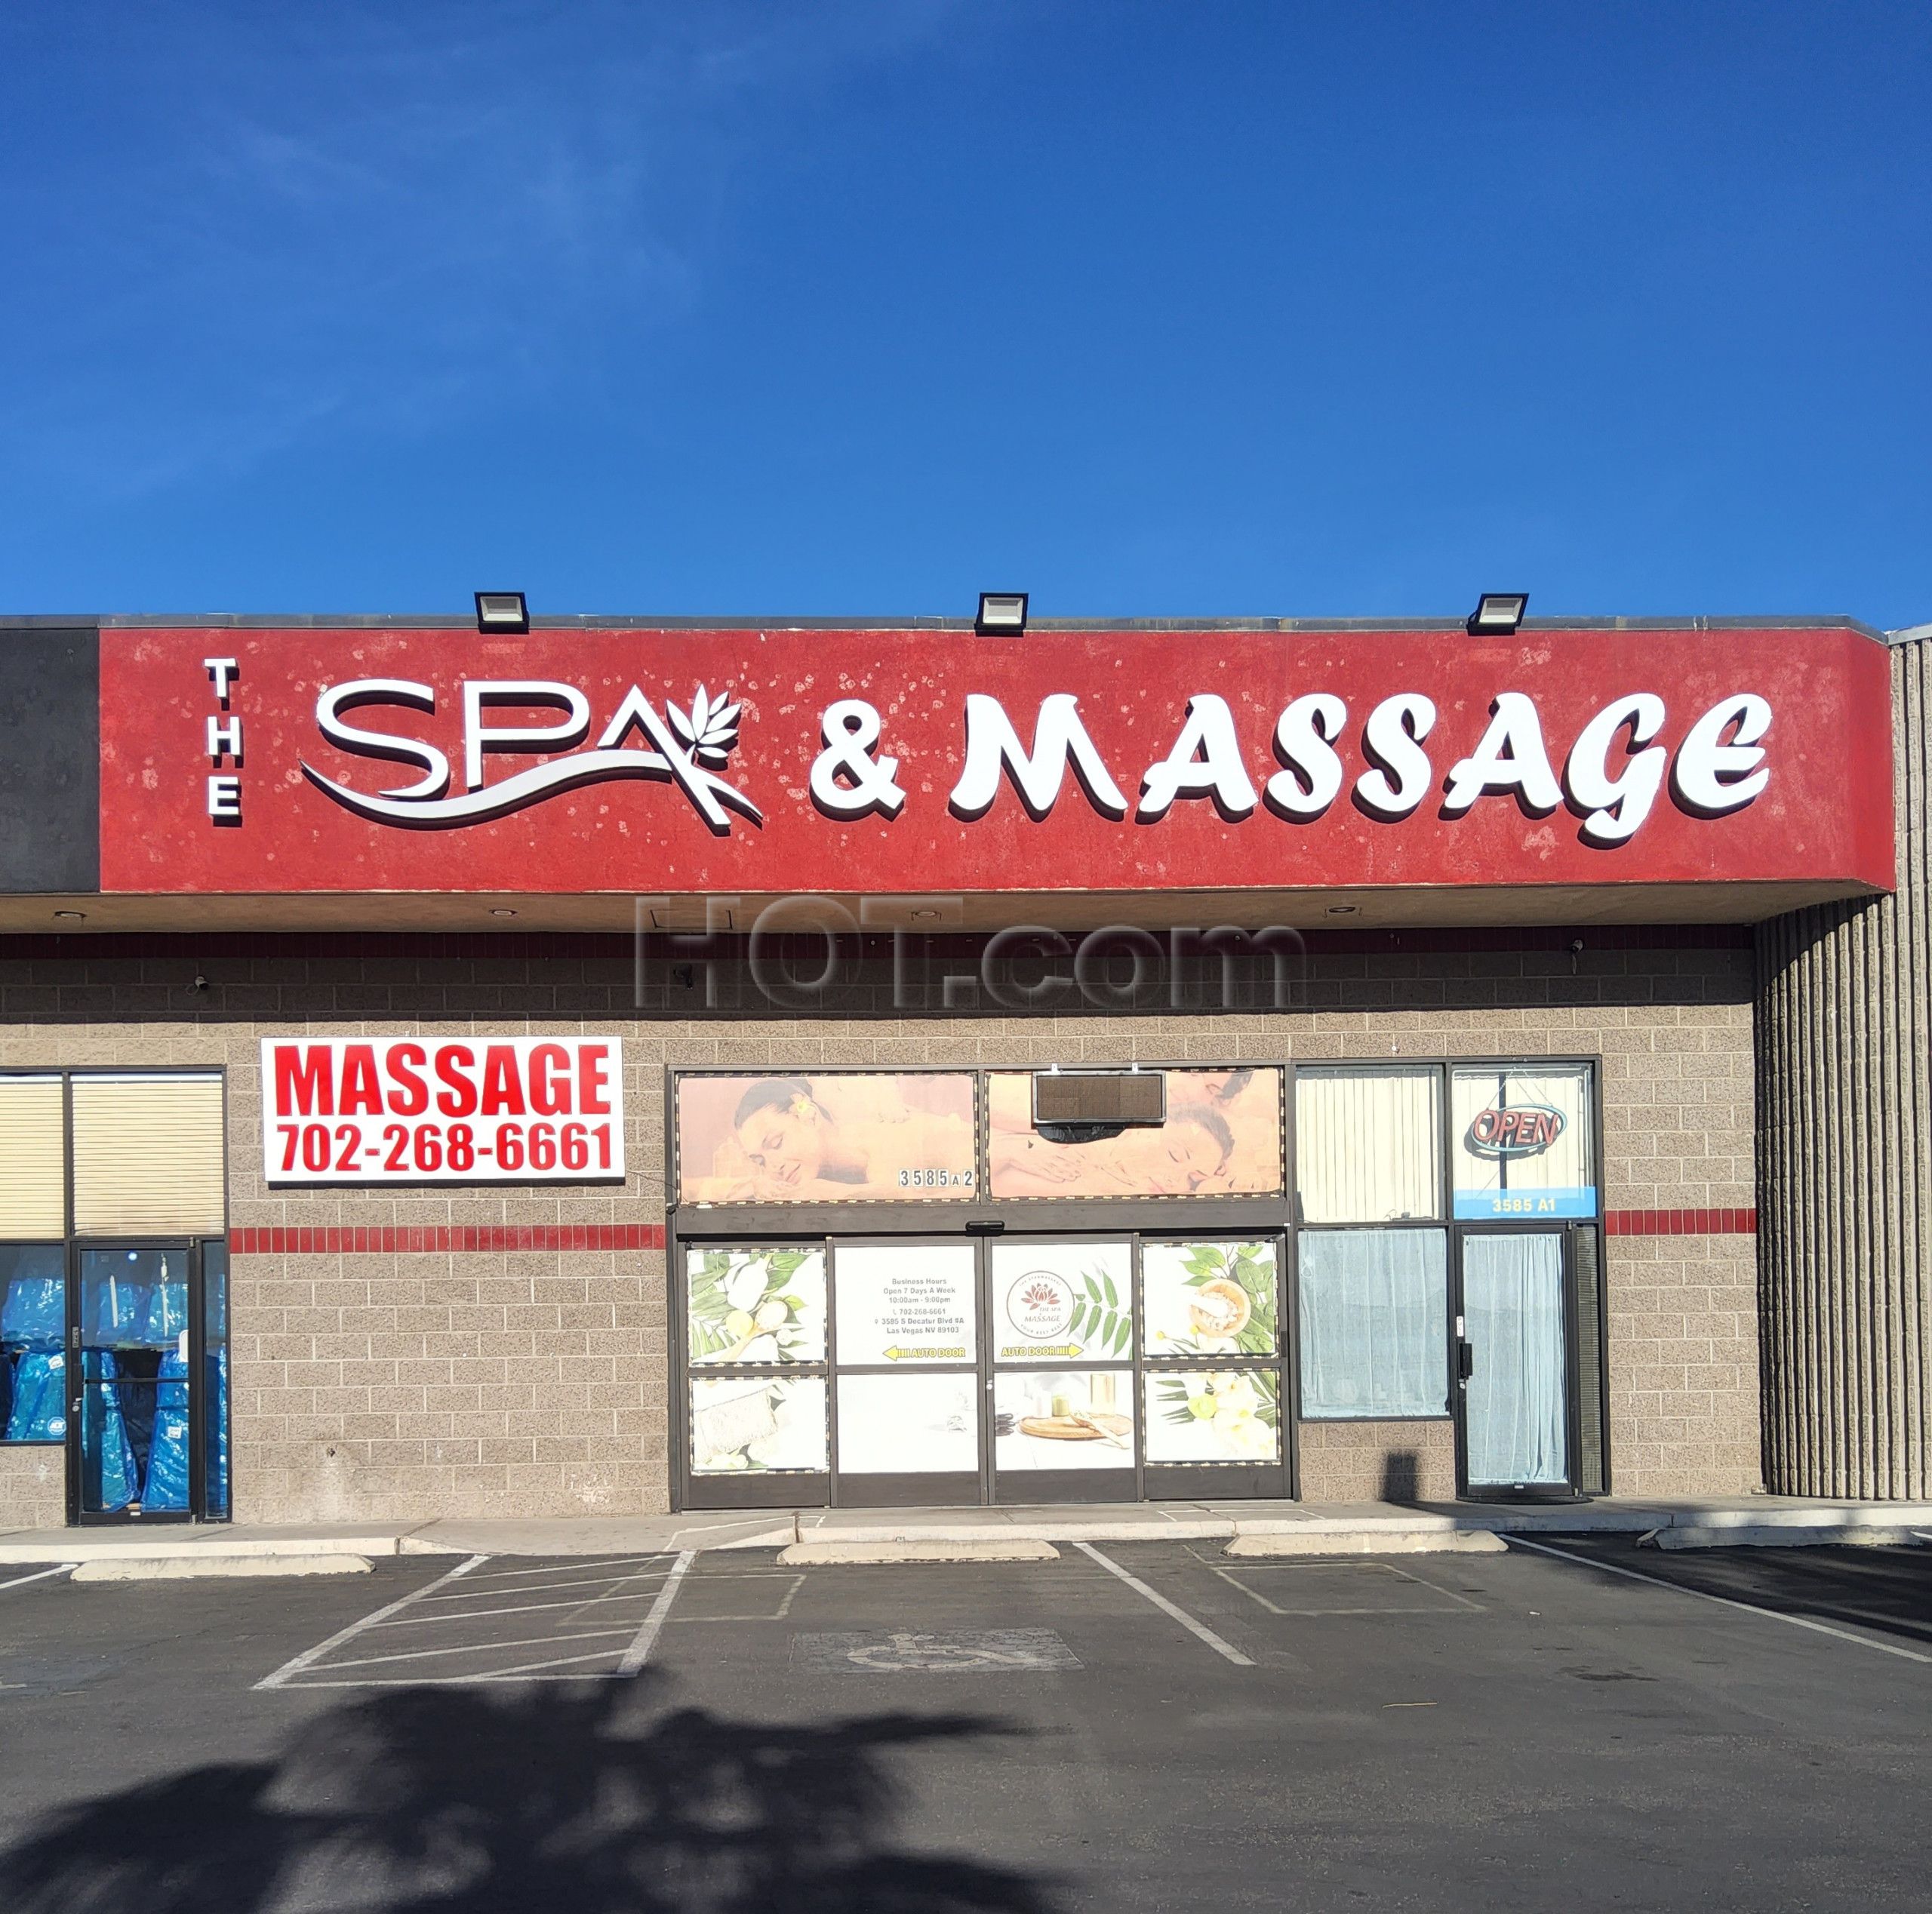 Las Vegas, Nevada The Spa & Massage